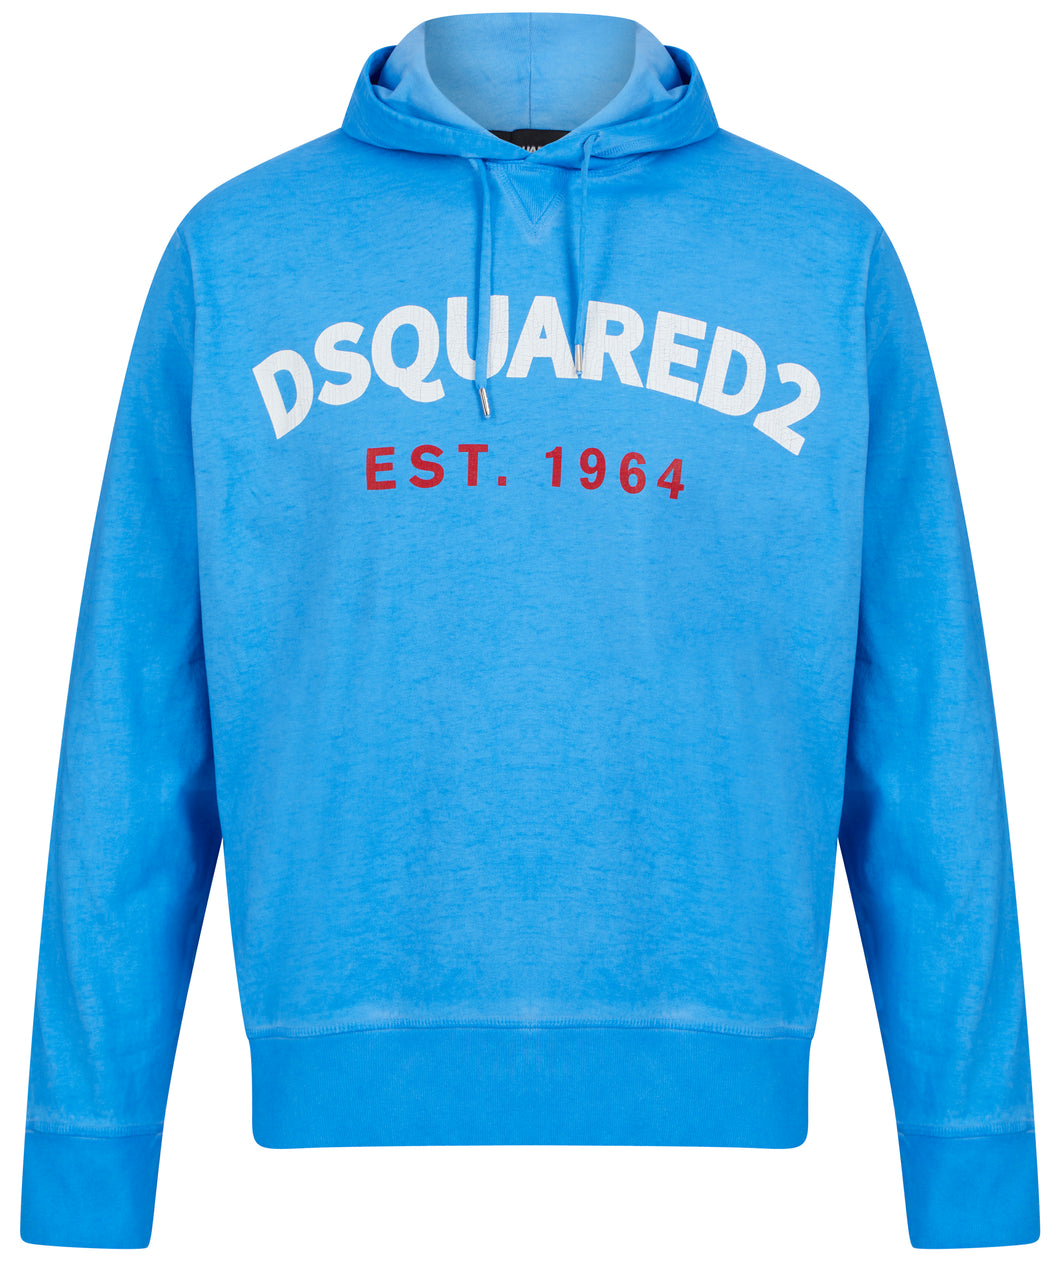 DSquared2 Est 1964 Hoody Blue